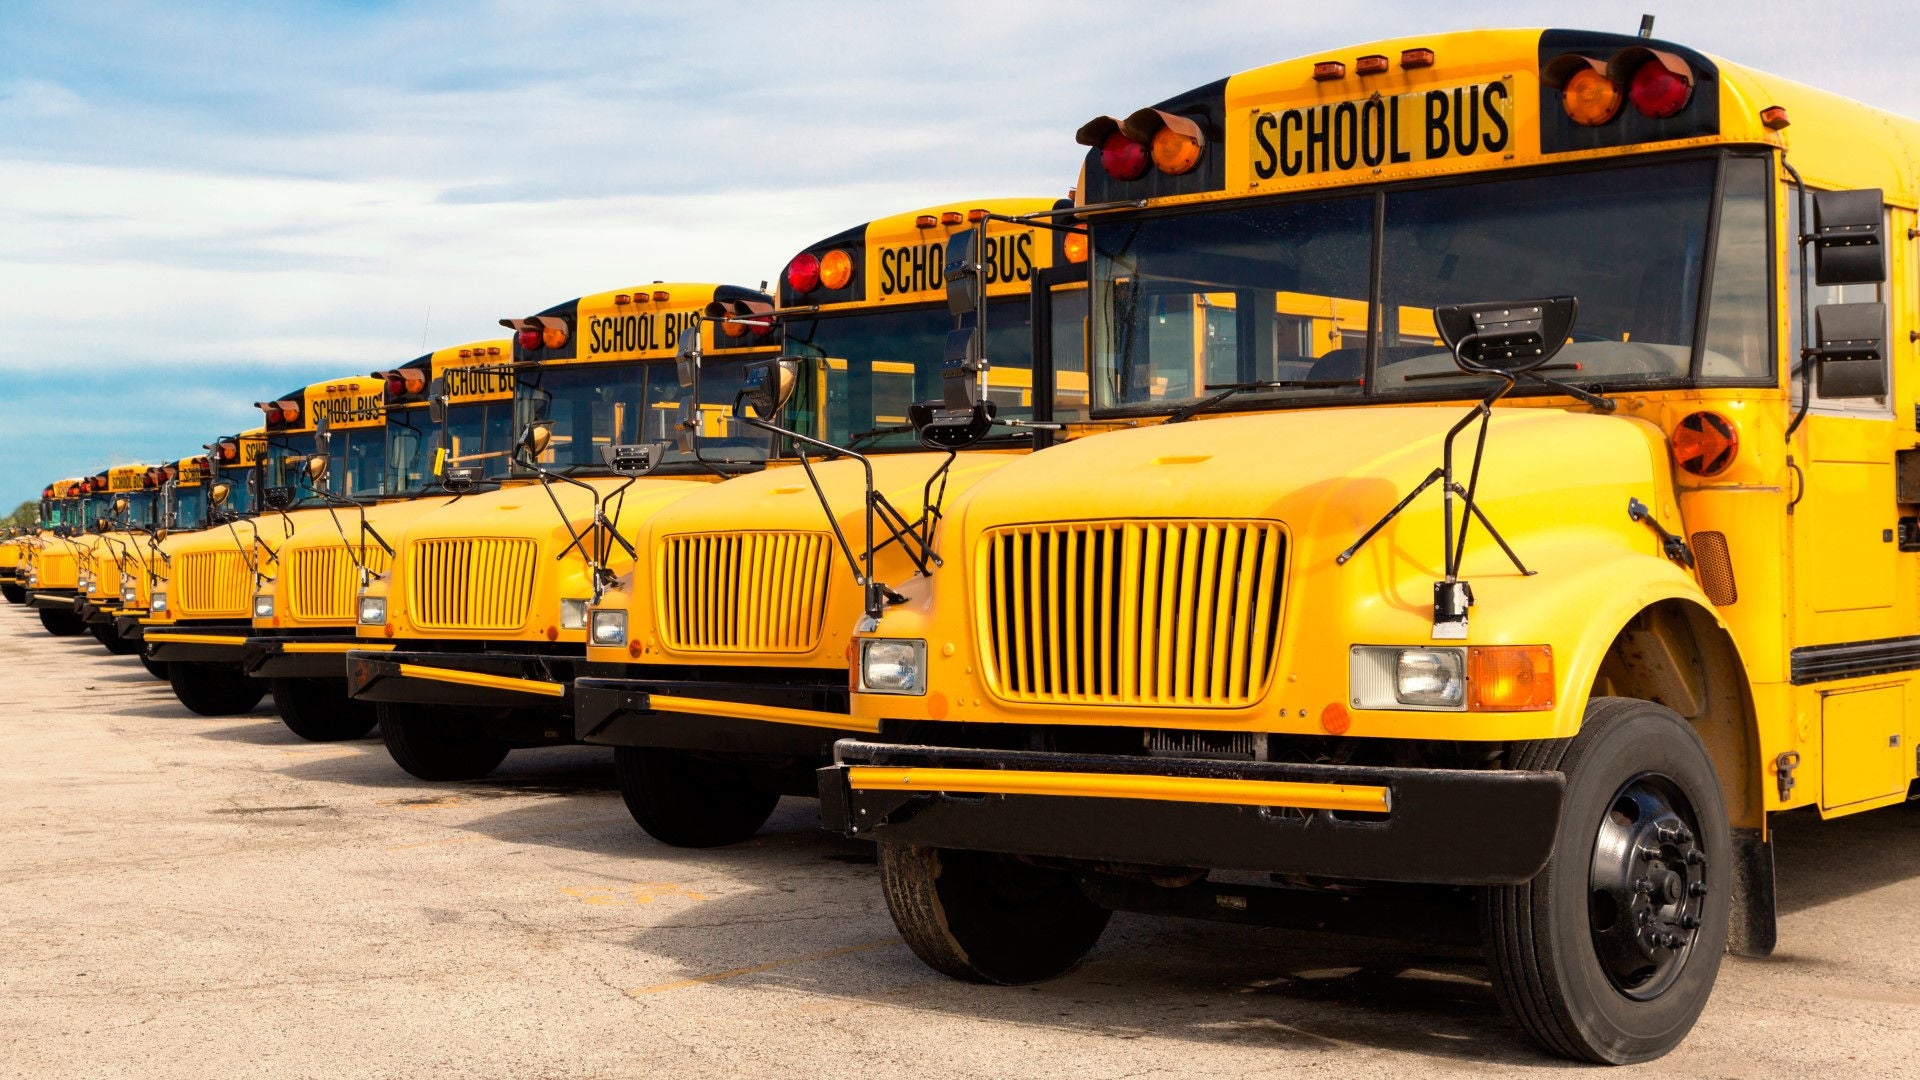 Lineup of school buses in parking lot